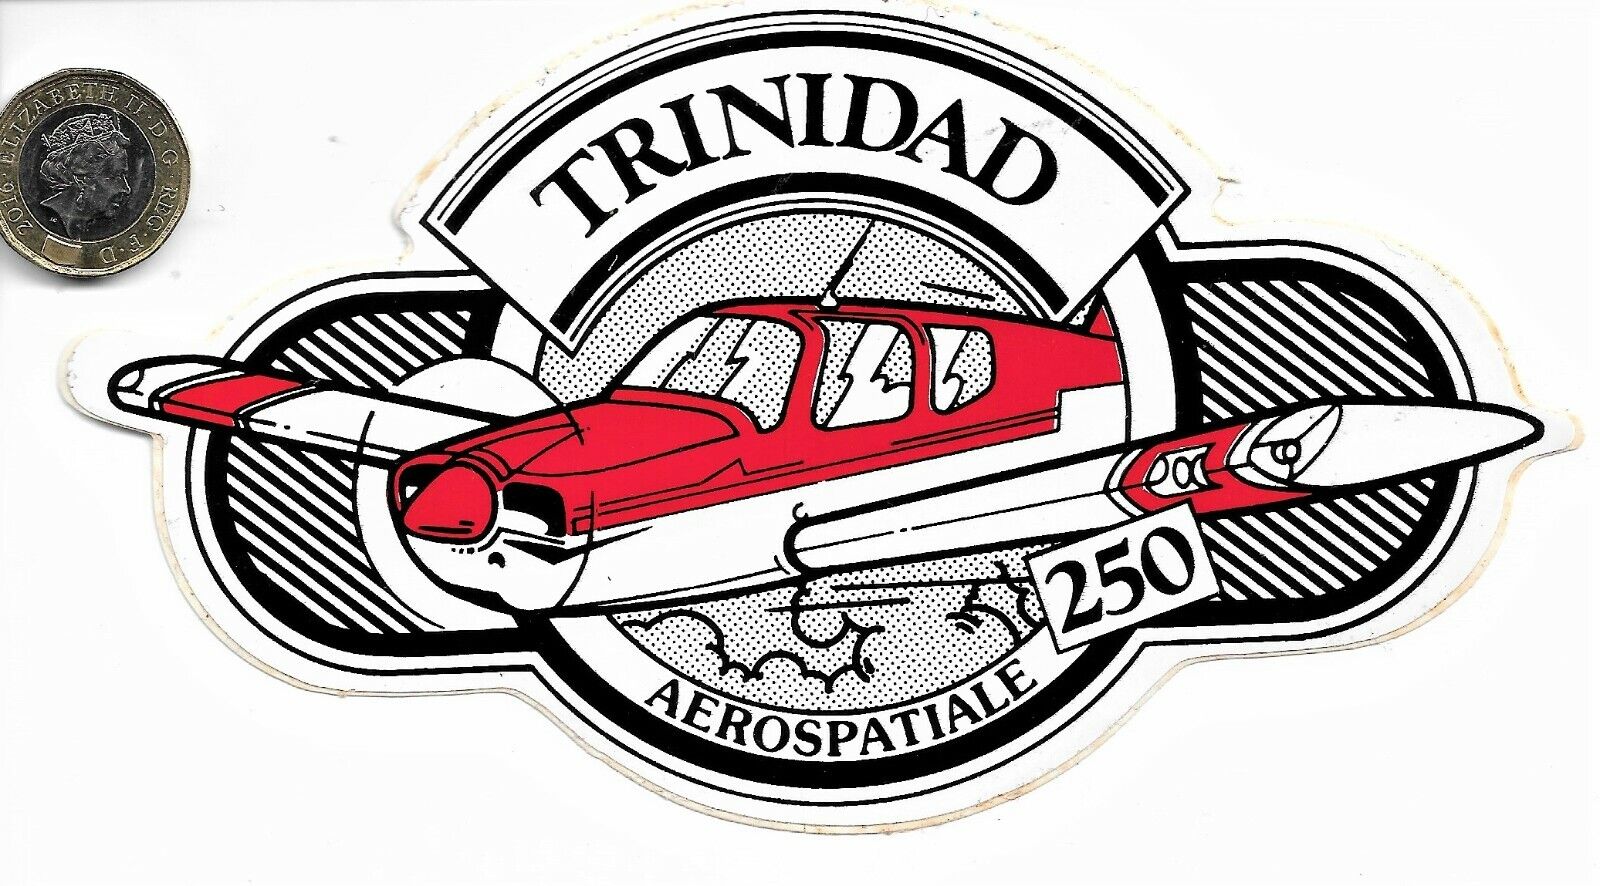 Rare Fine Complete Original Trinidad Aerospatiale 250 Sticker